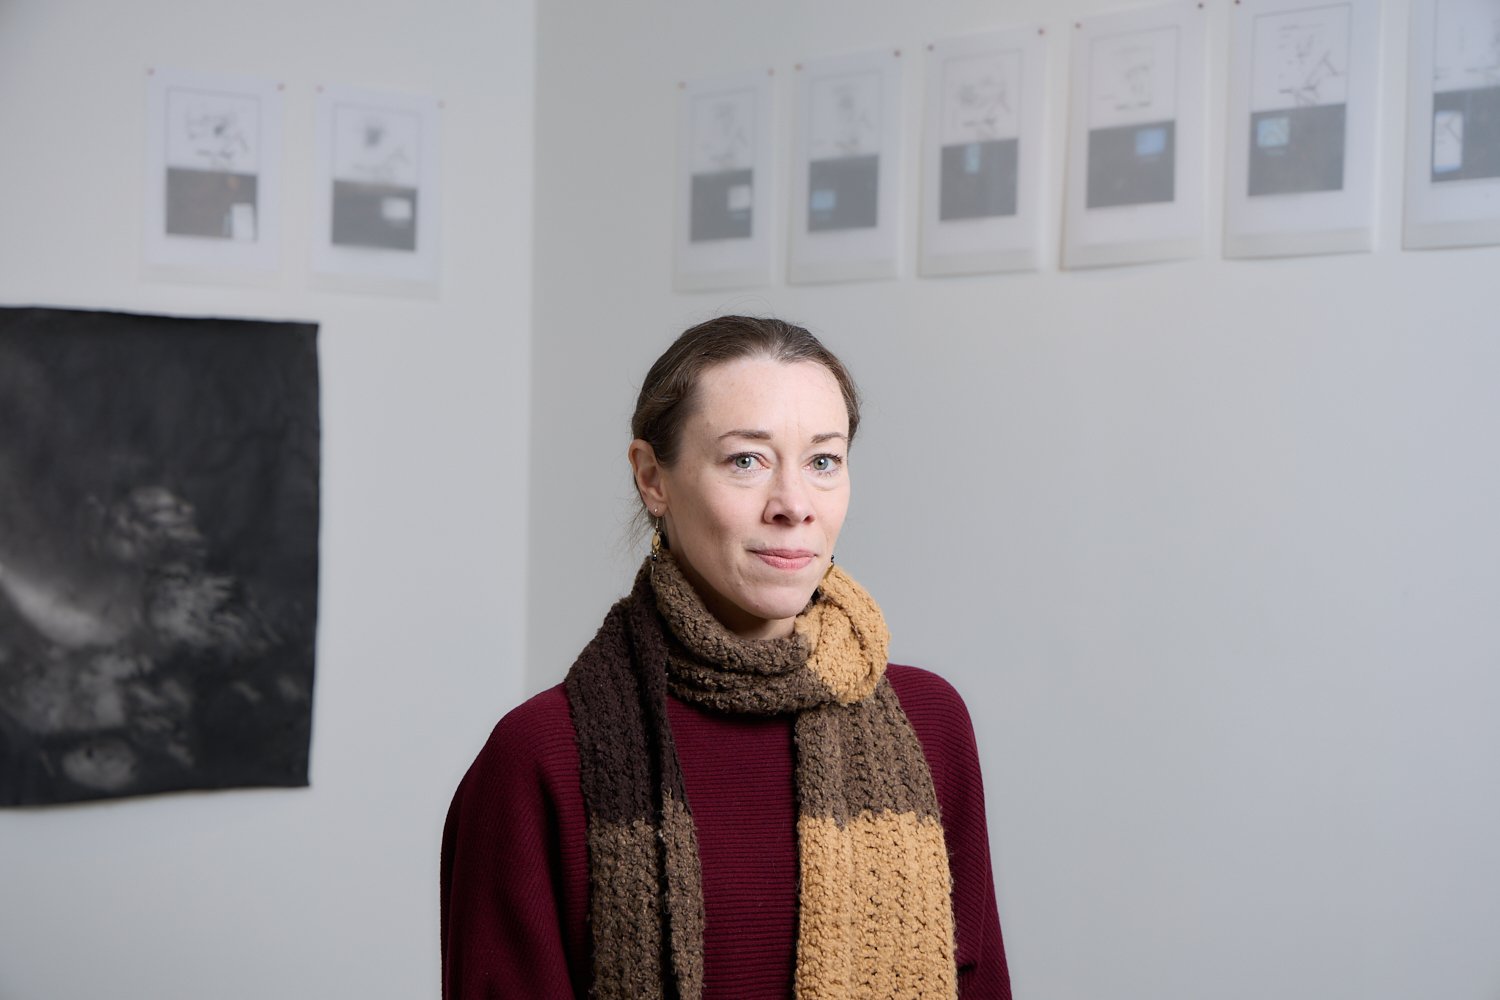  Gallery director Alison McNulty 